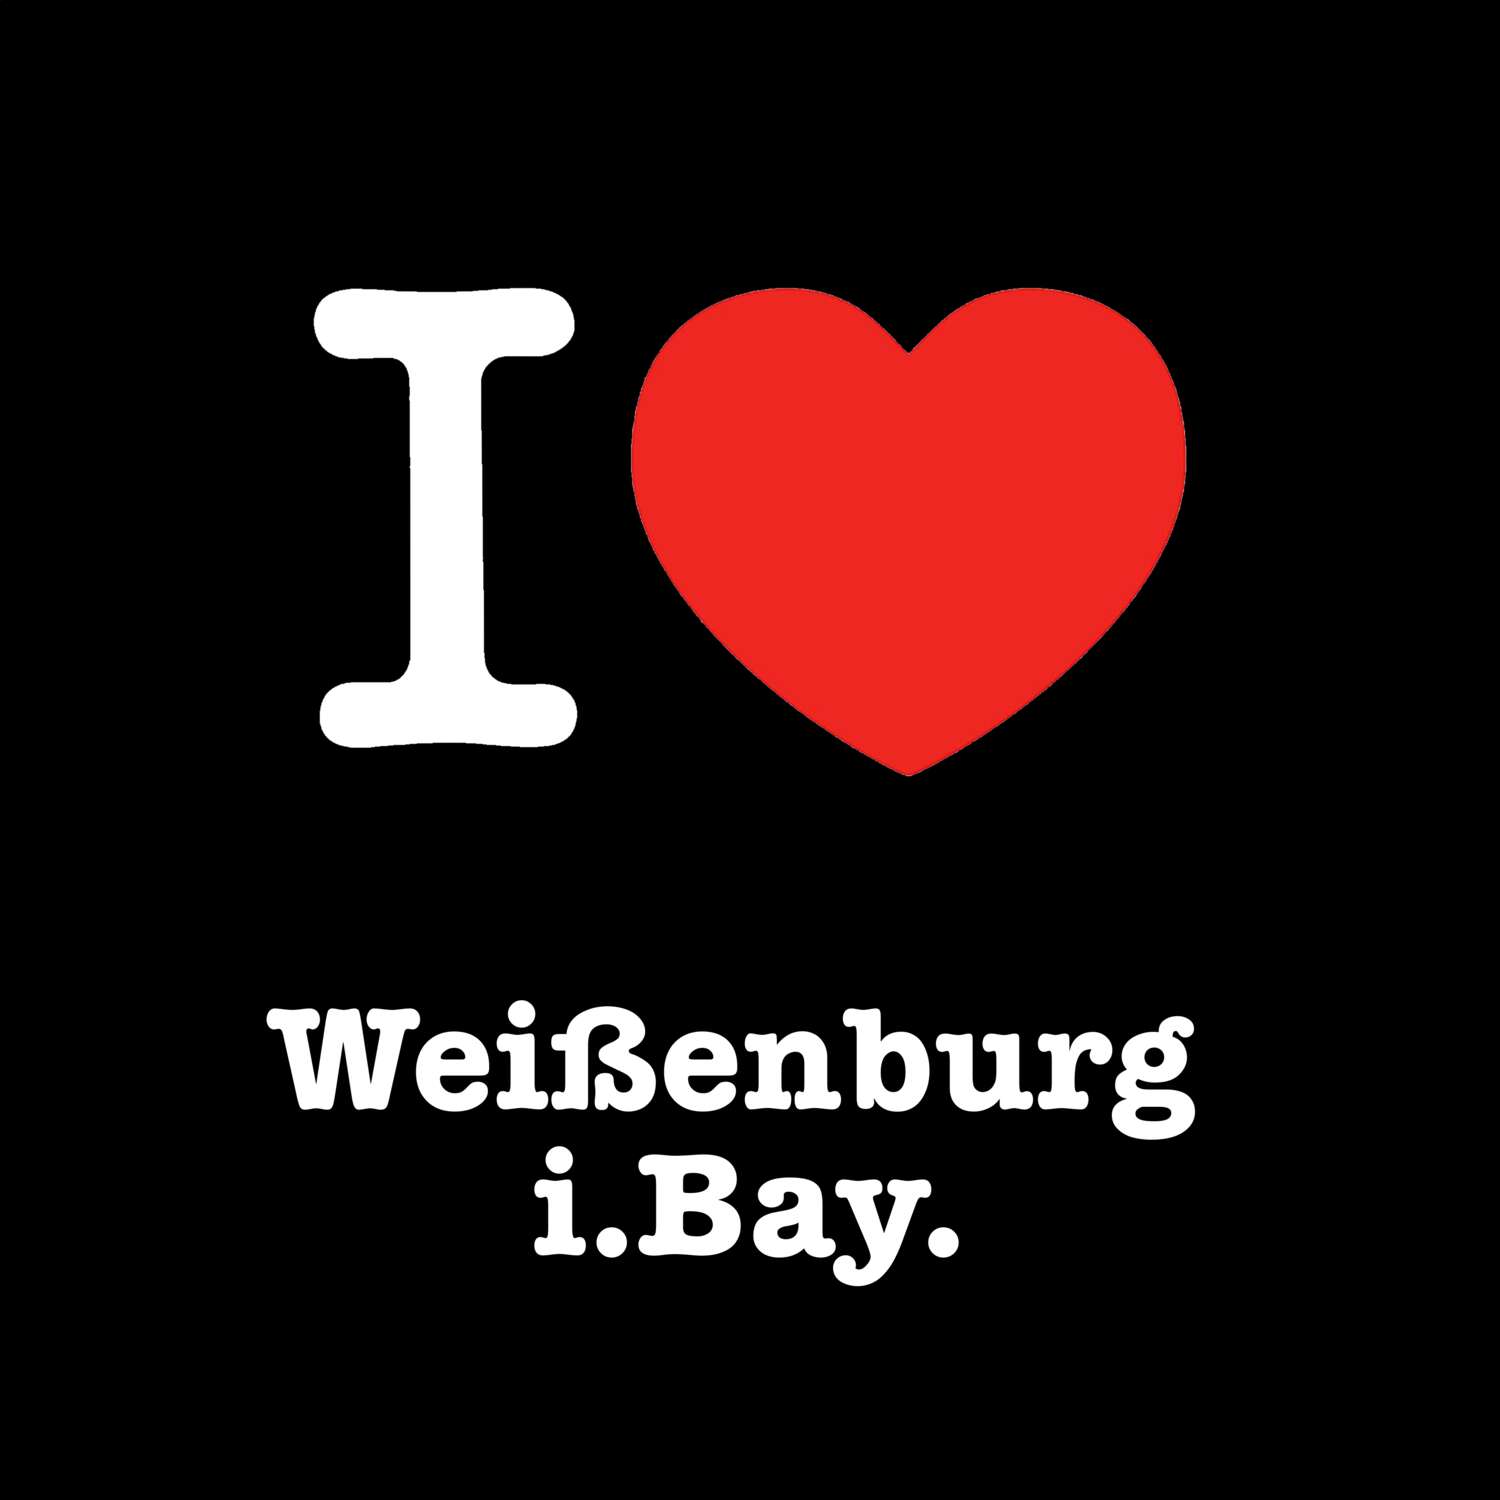 Weißenburg i.Bay. T-Shirt »I love«